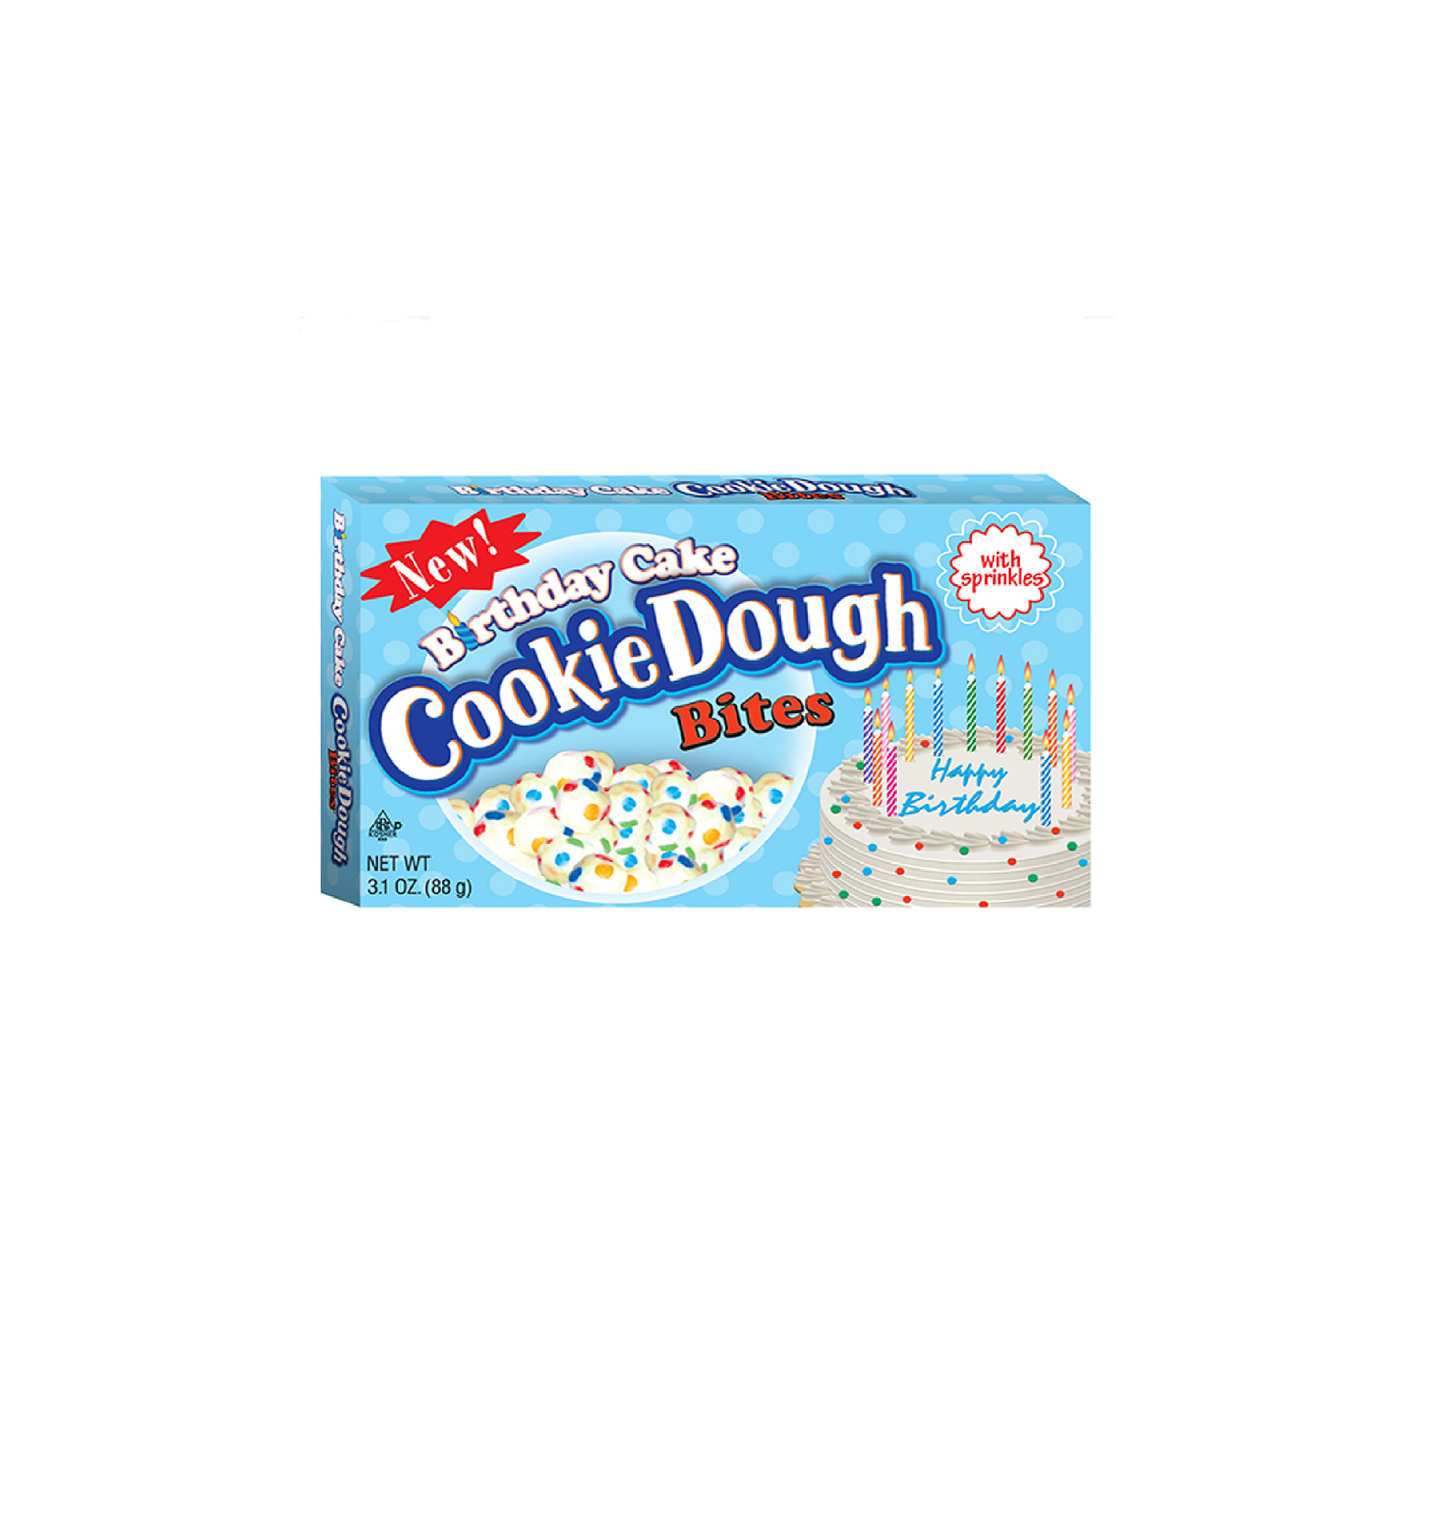 Cookie Dough Bites Birthday Cake - 88g